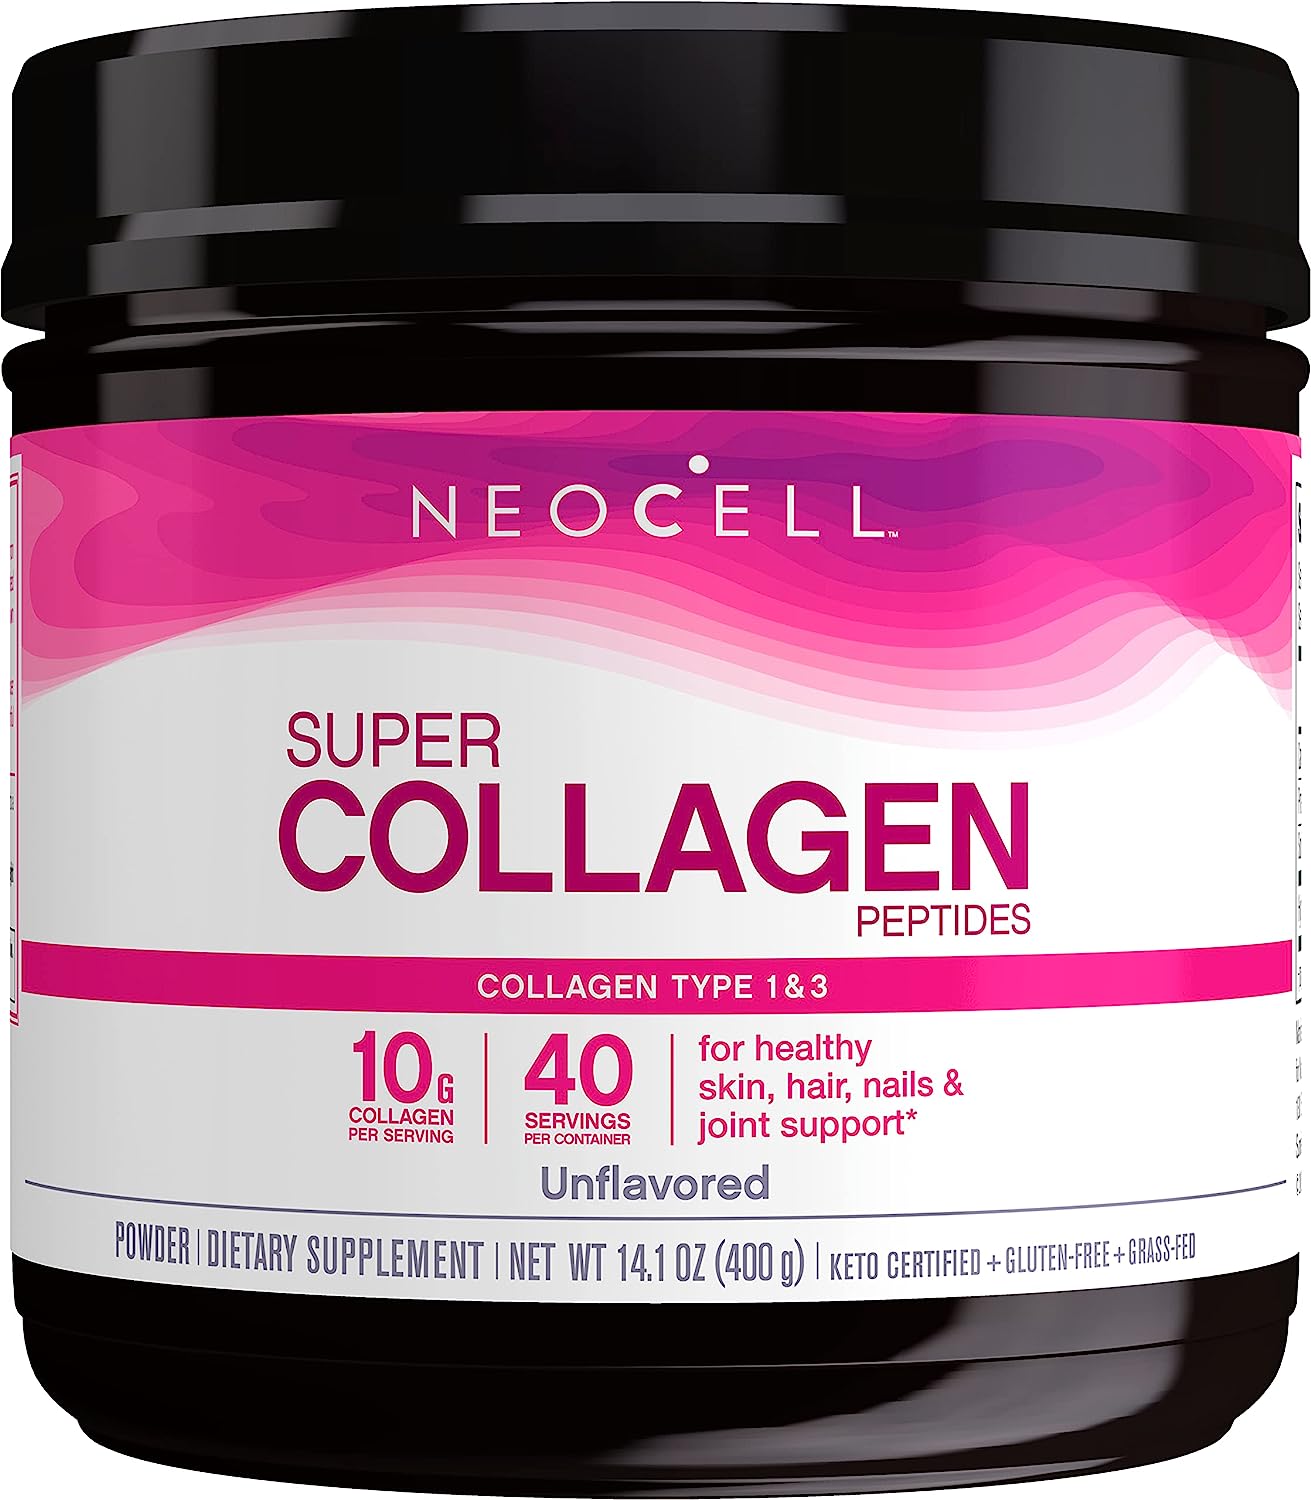 NeoCell Super Collagen Powder, 10g Collagen Peptides per Serving, Gluten Free, Keto Friendly, Non-GMO, Grass Fed, Paleo Friendly, Healthy Hair, Skin, Nails & Joints, Unavored, 1